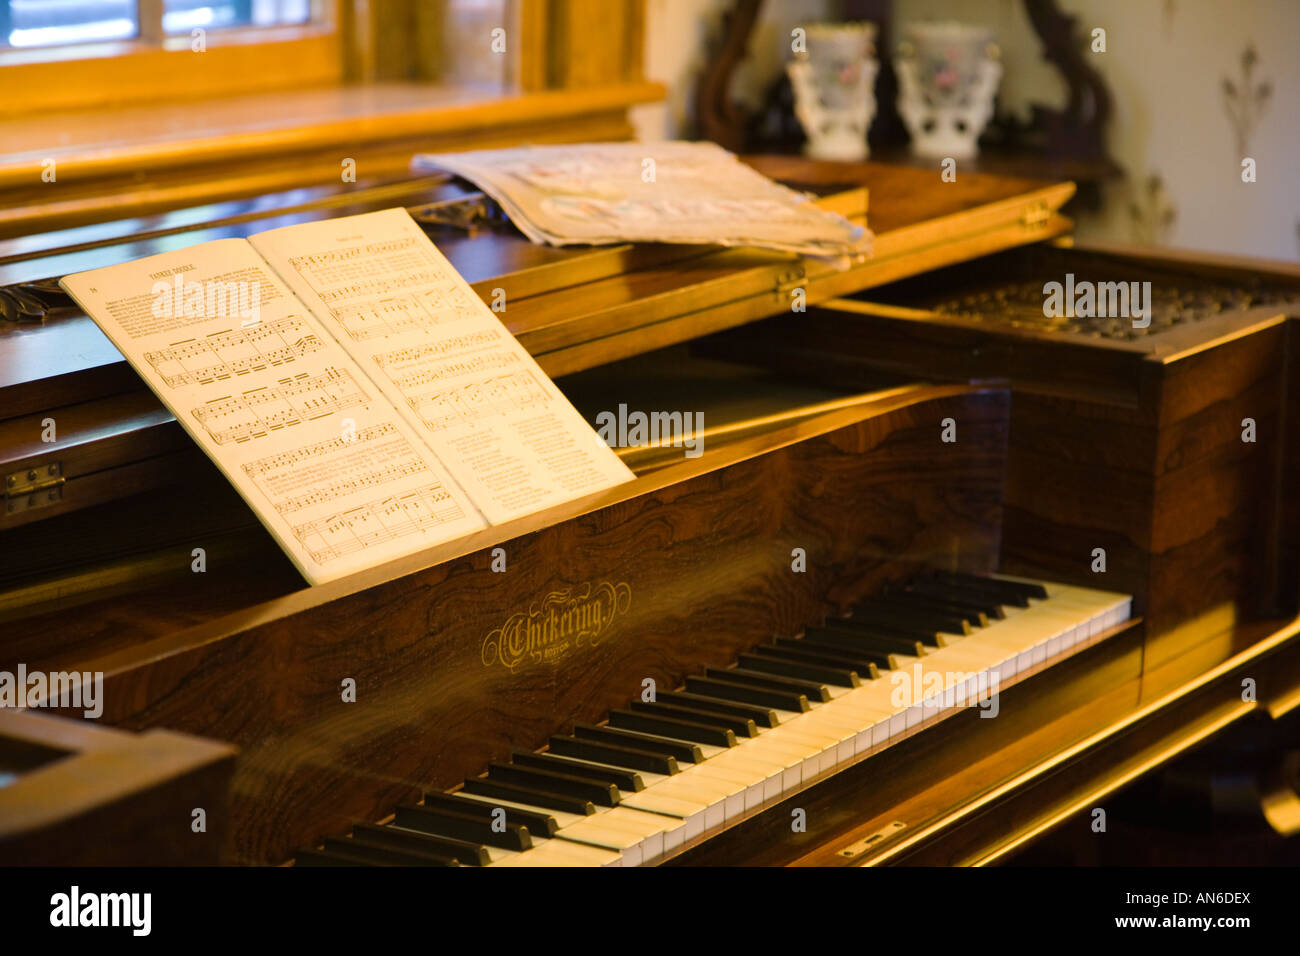 ILLINOIS Galena Sheet music on piano interior of home of Ulysses S Grant  former American president Civil War hero Stock Photo - Alamy